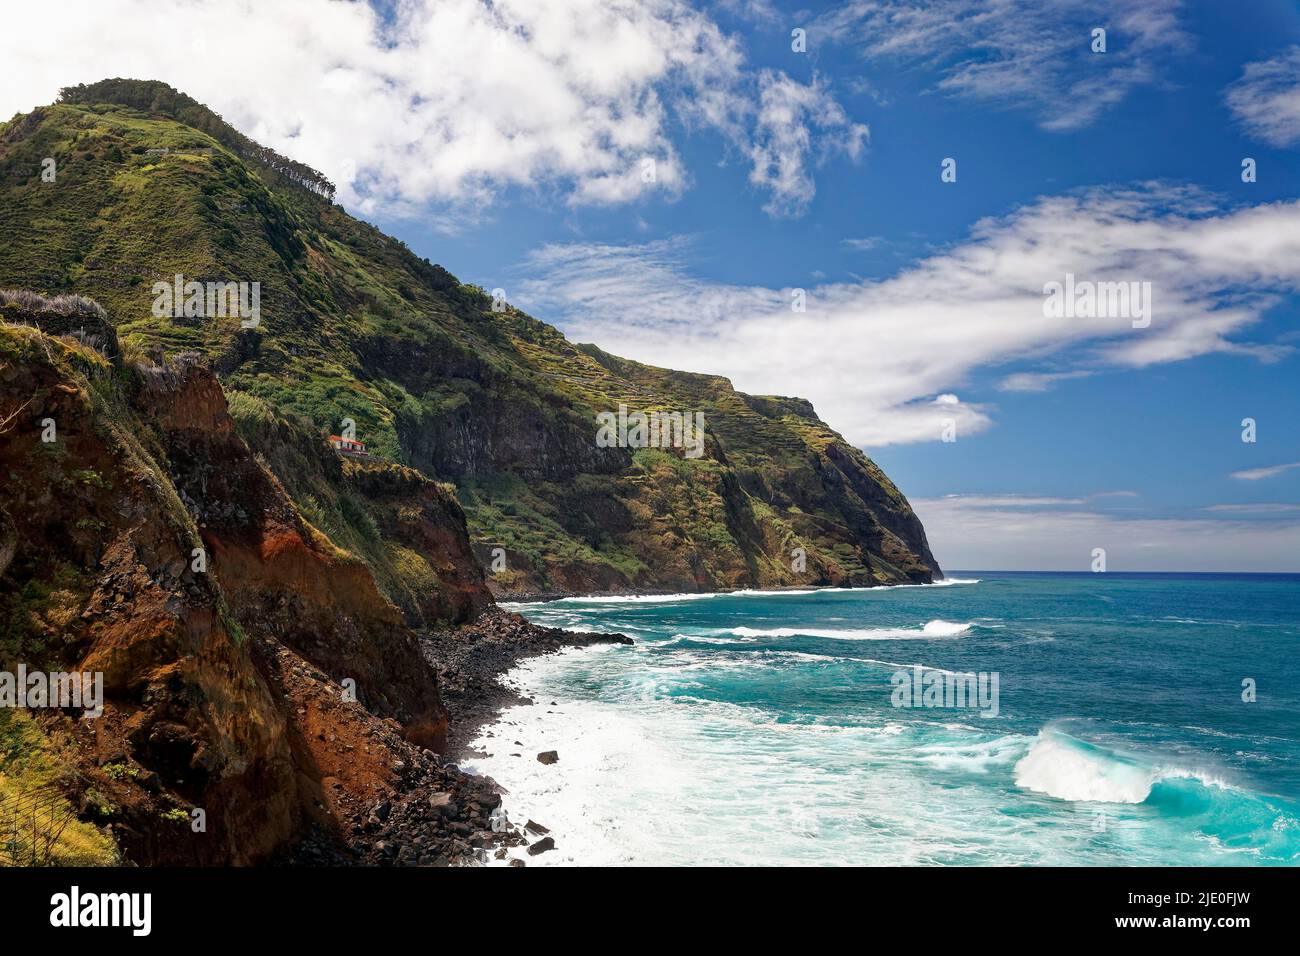 Costa ripida in mare, paesaggio, surf forte, Madeira, ufficialmente Regione Autonoma di Madeira, isola, Oceano Atlantico, arcipelago Foto Stock